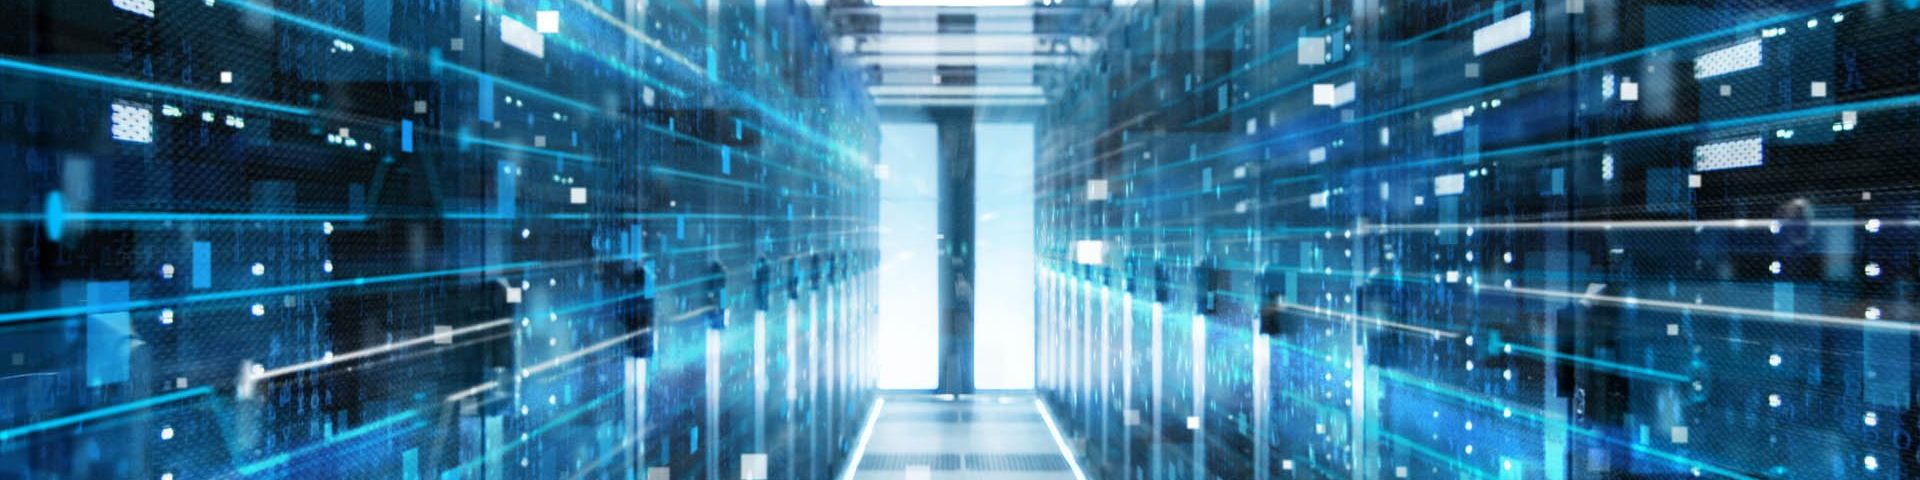 Representation of data – a blue, brightly lit and futuristic server room